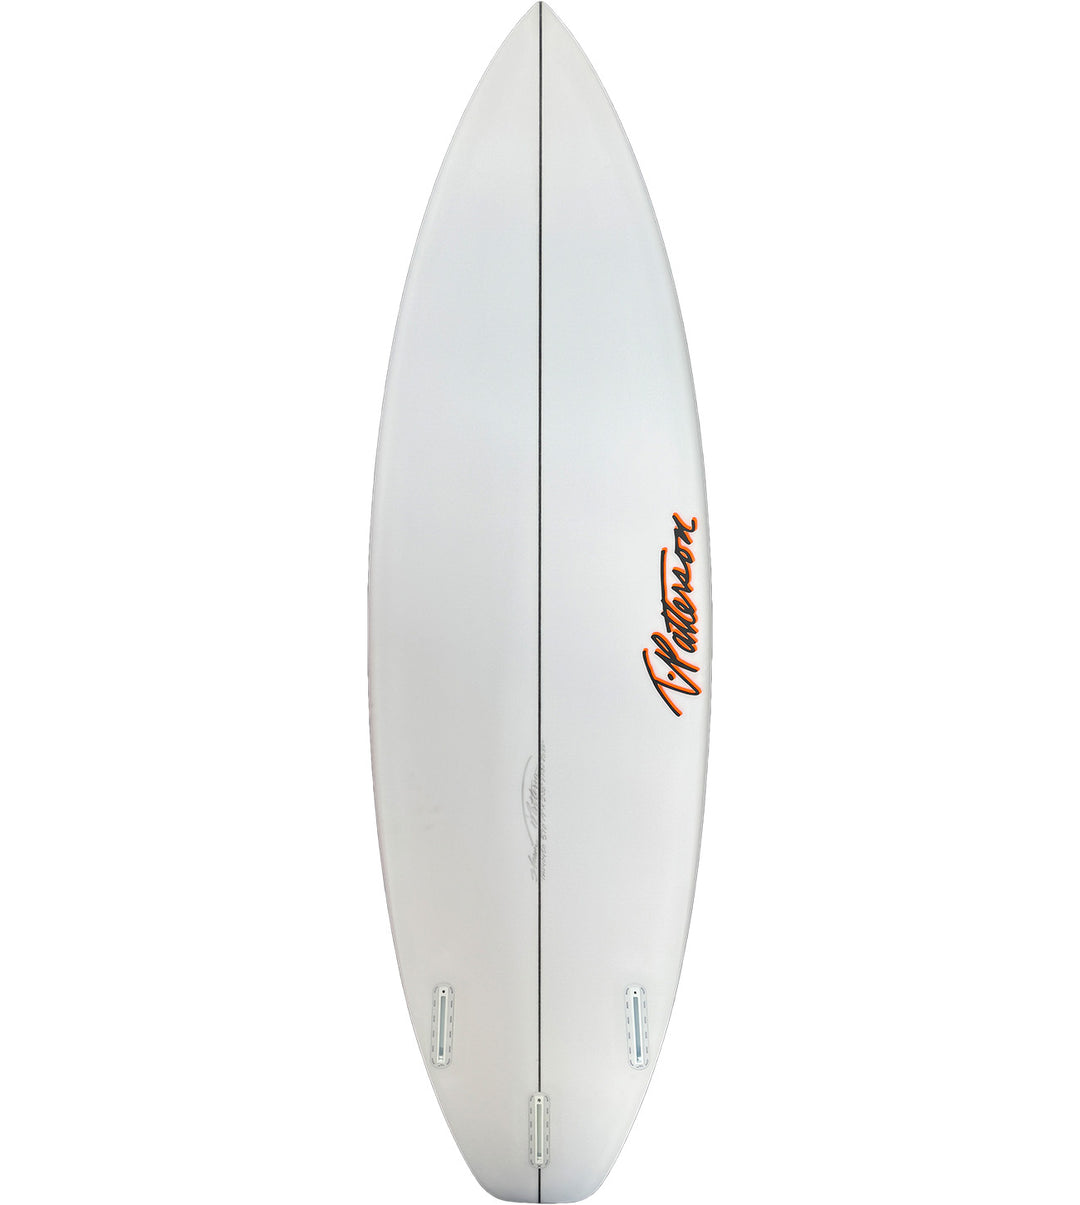 TPatterson Surfboard
TP X-File/Futures 5'10'' #TA240450